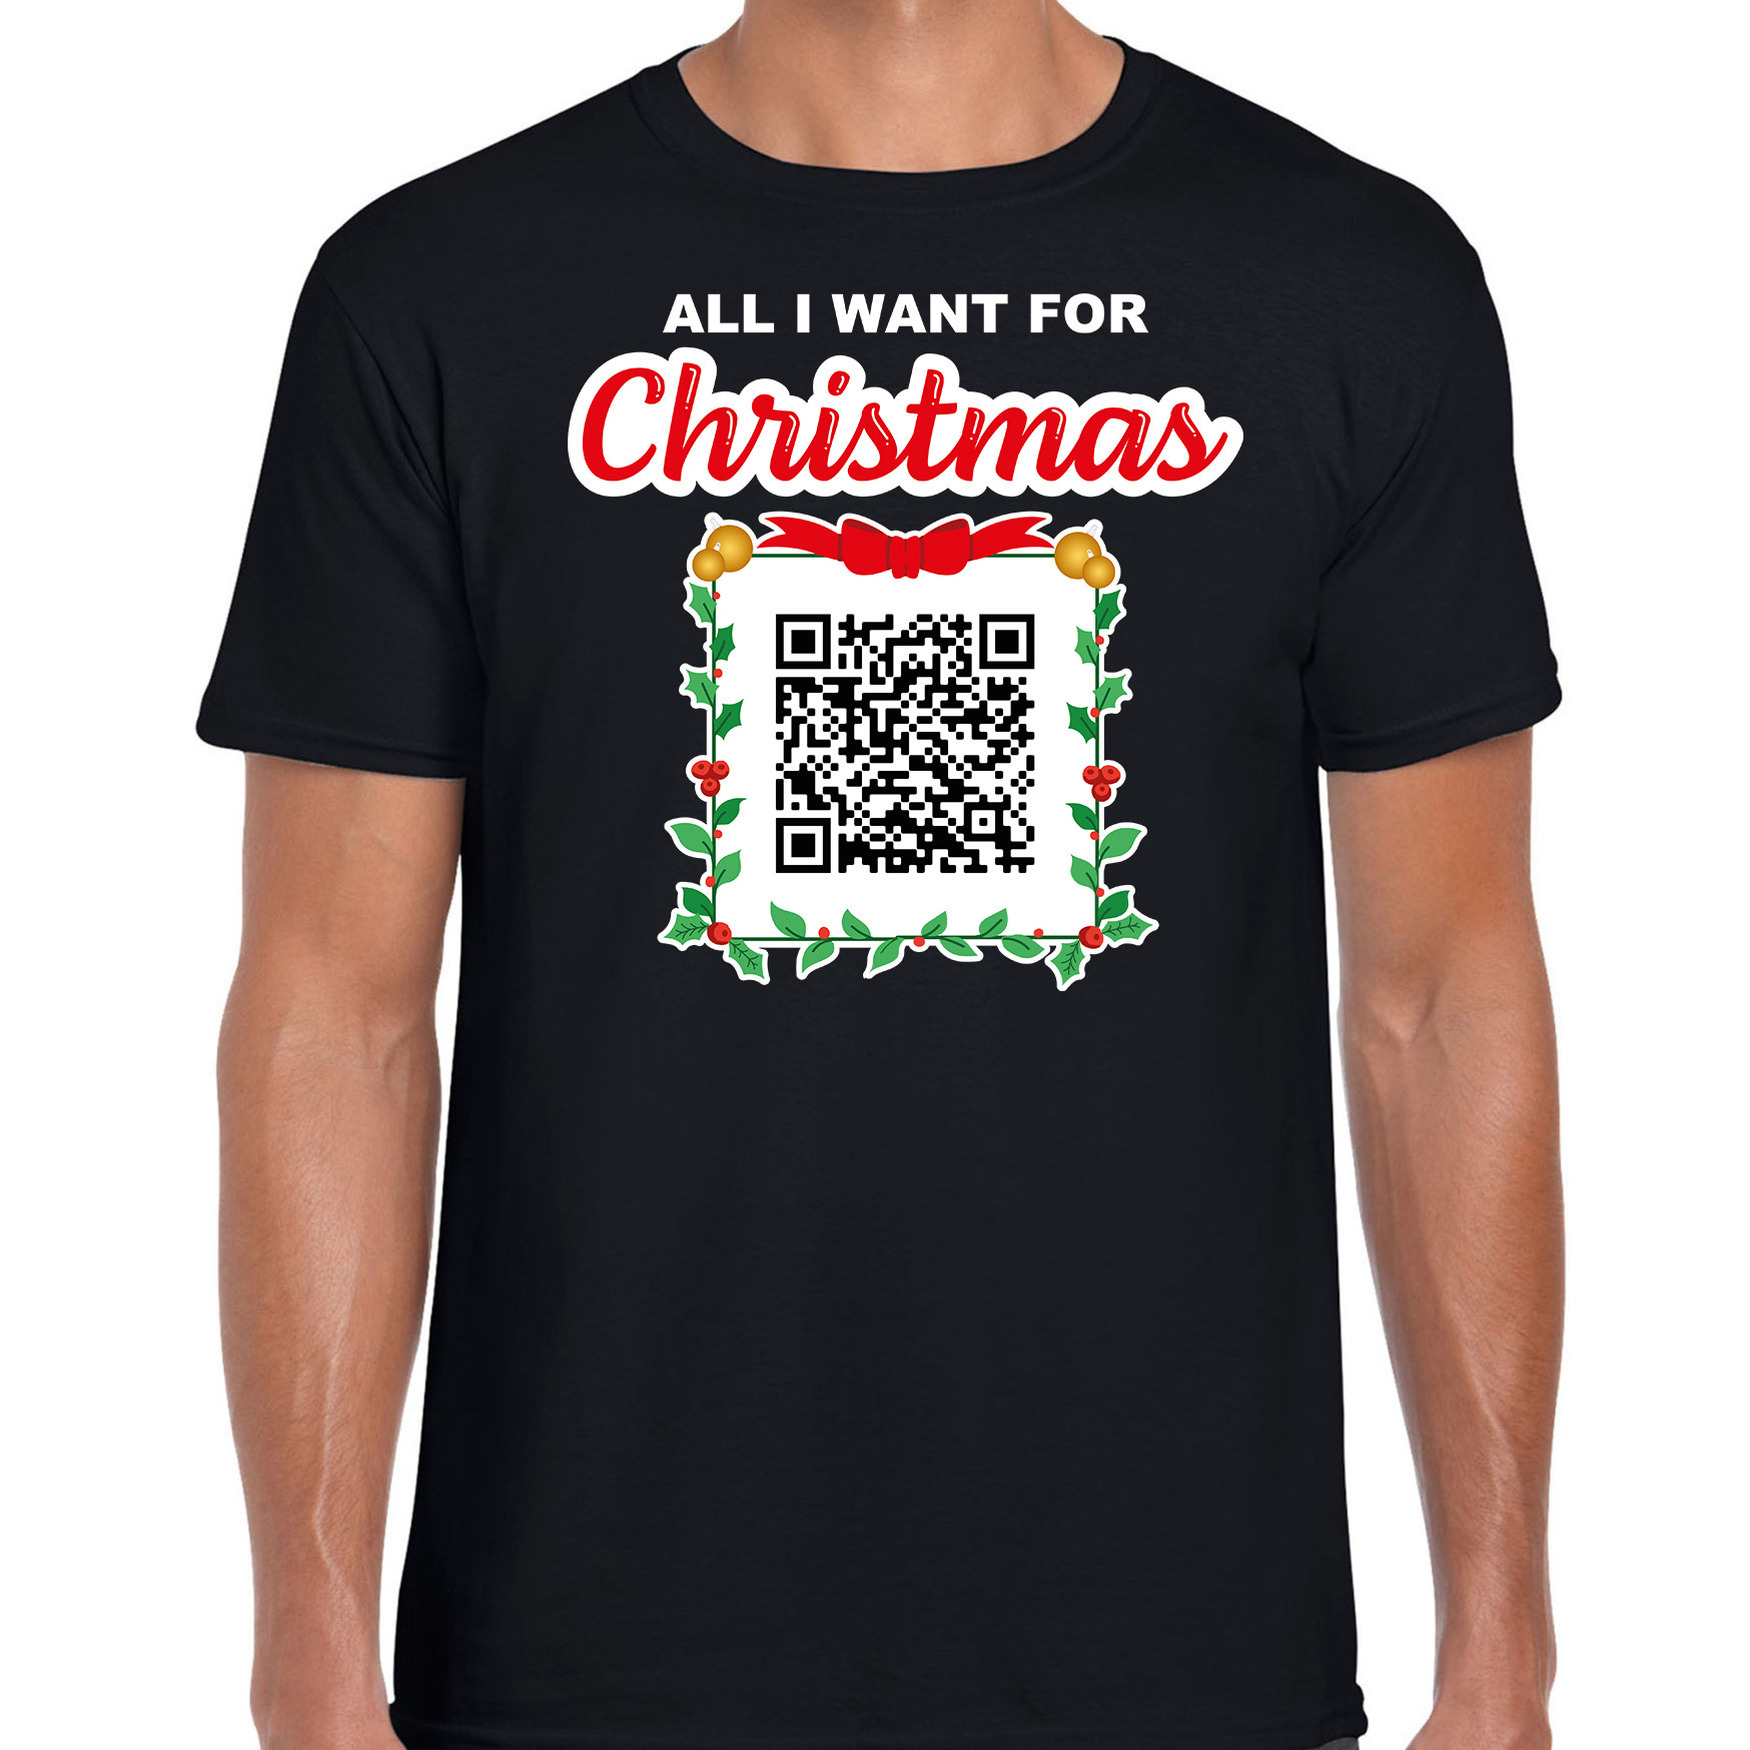 Kerst QR code kerstshirt Een lekkere gast heren zwart - Fout gay kerst t-shirt